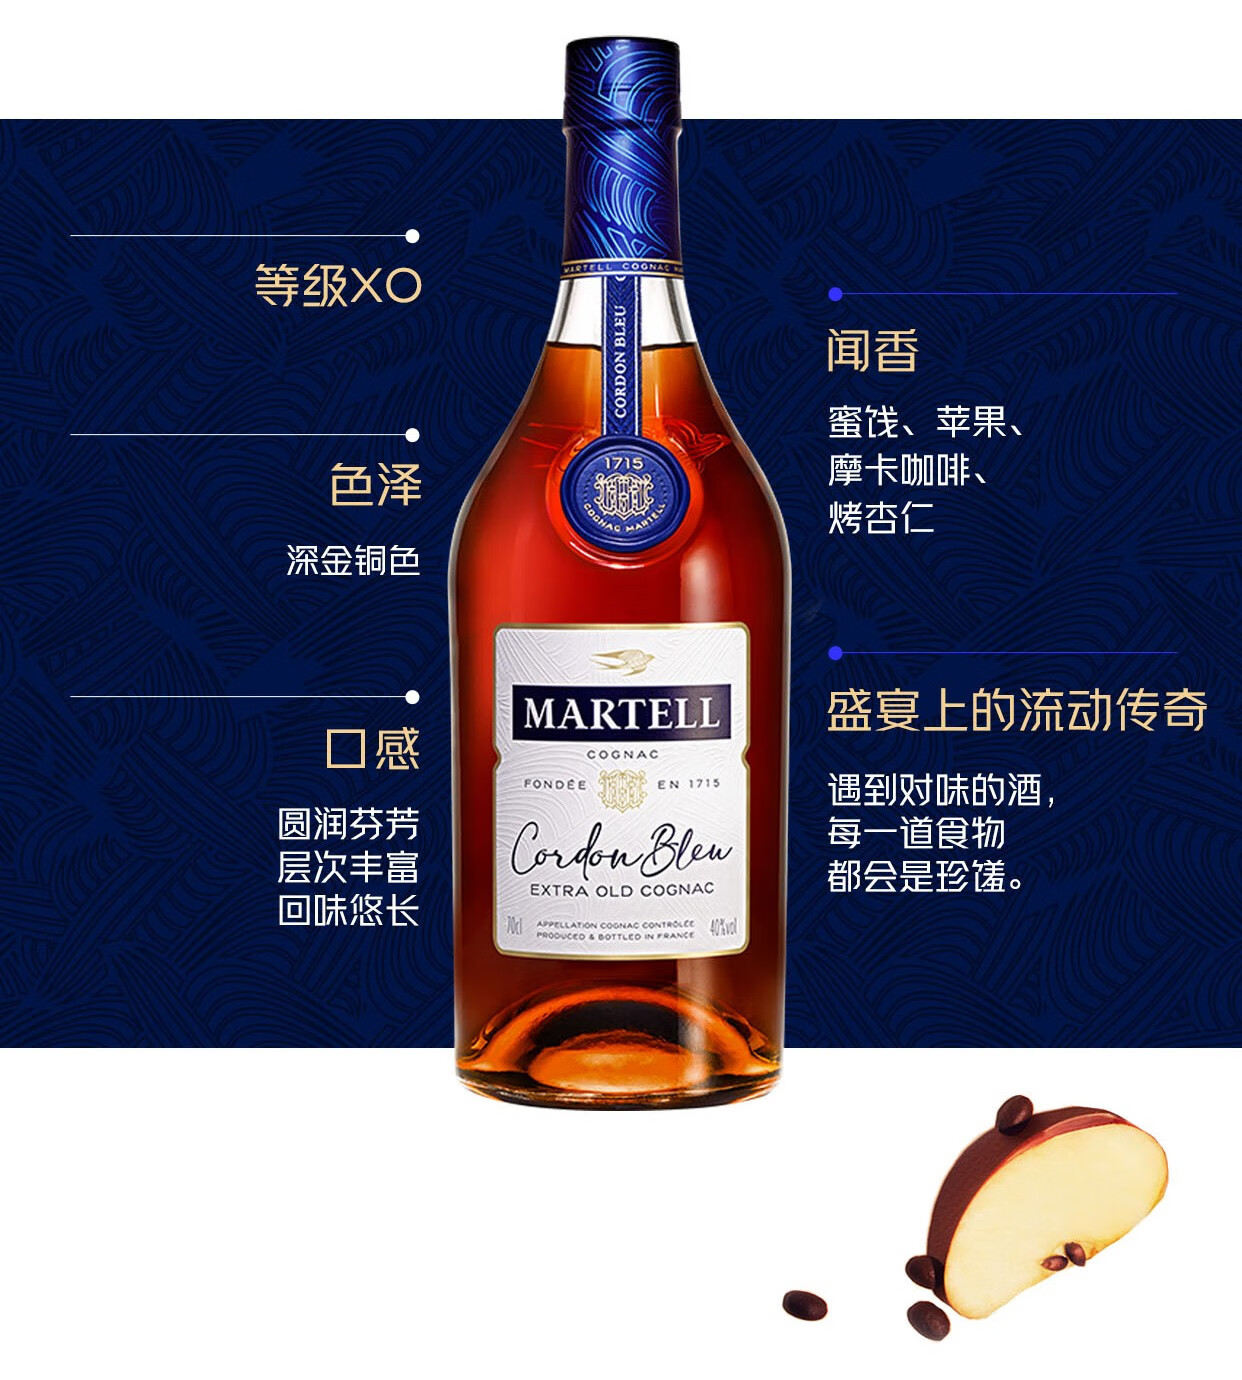 (martell)蓝带700ml 法国干邑白兰地xo级 法国进口洋酒【图片 价格